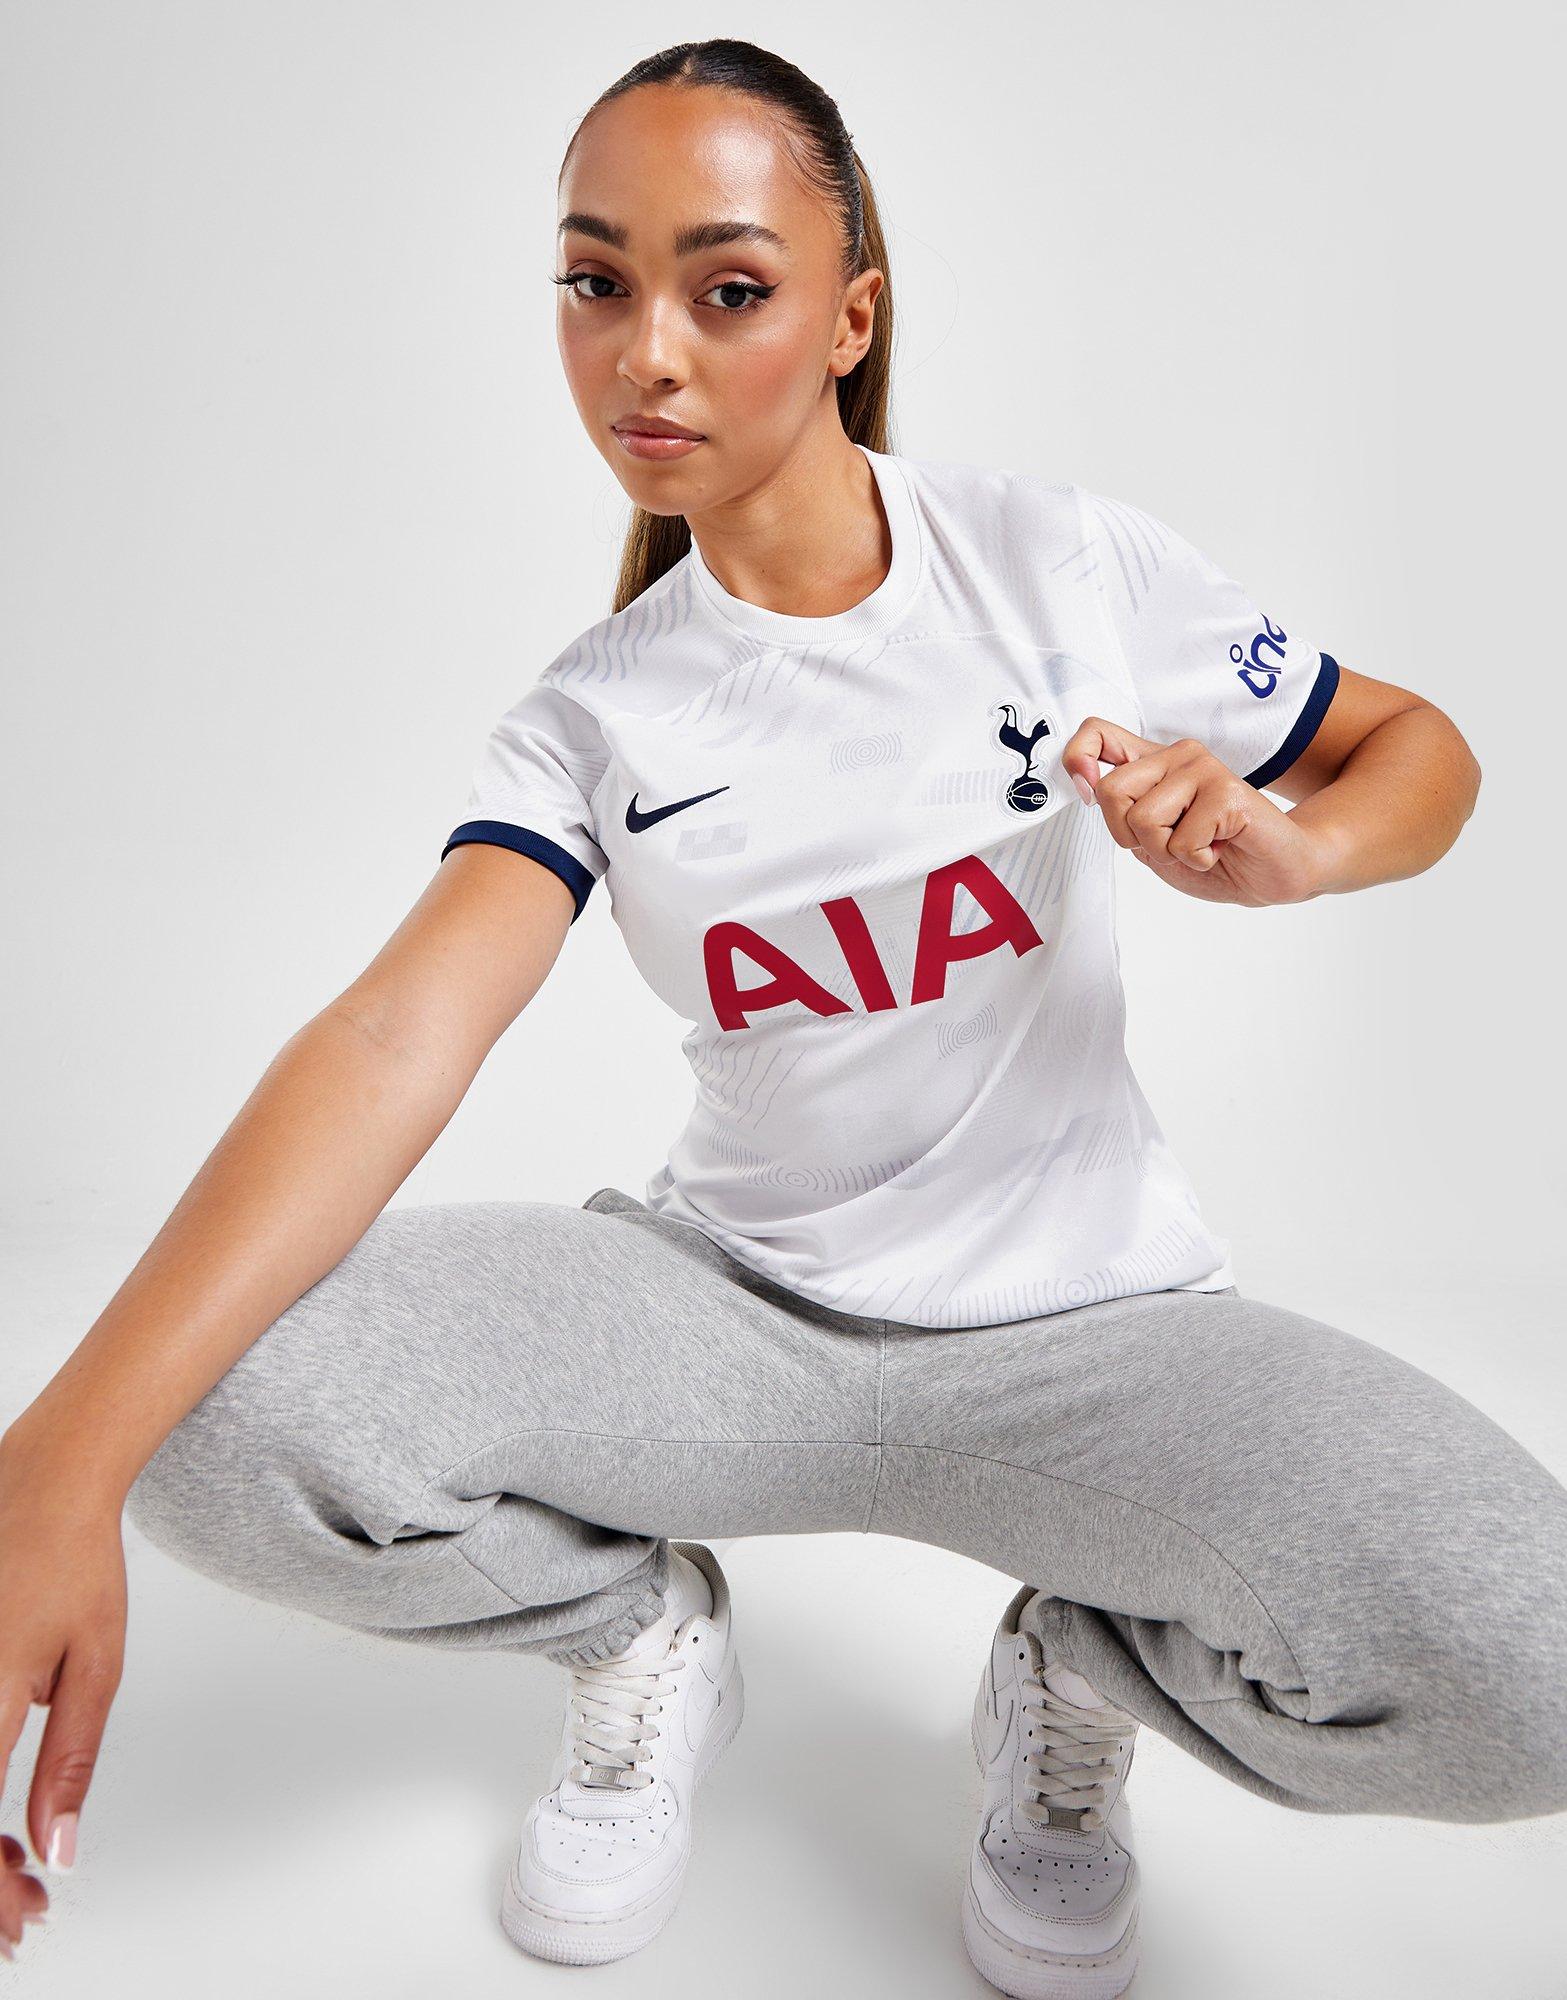 Tottenham Hotspur 15/16 Under Armour Away Kit - Football Shirt Culture -  Latest Football Kit News and More